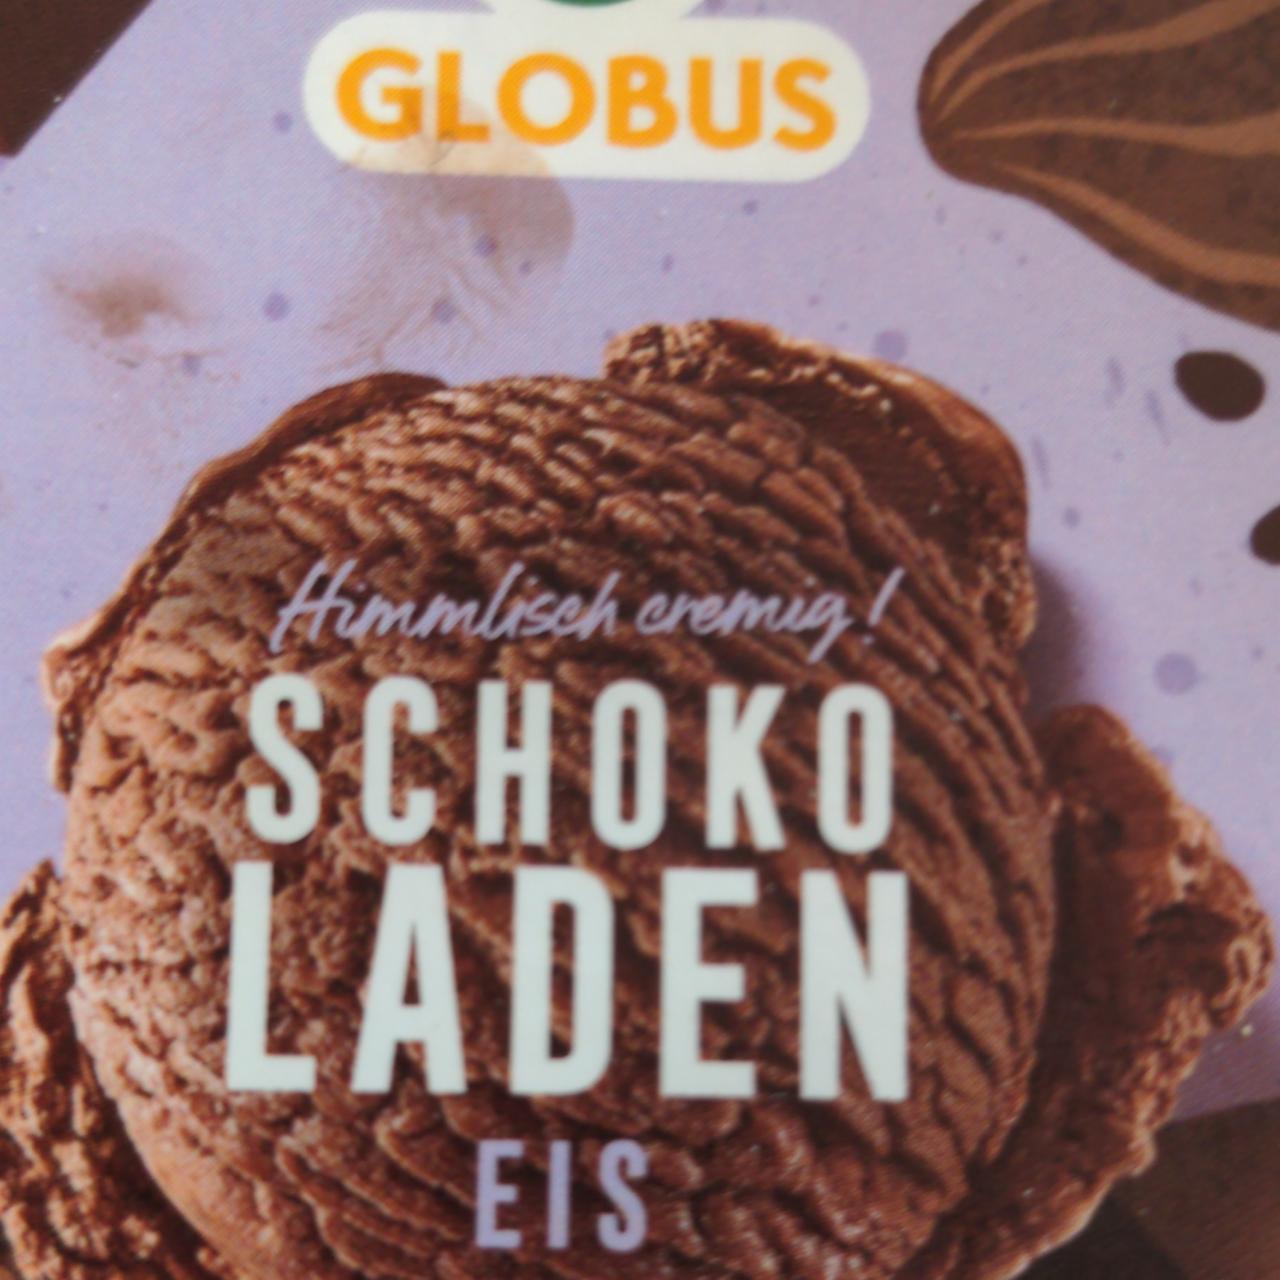 Fotografie - Schoko laden eis Globus